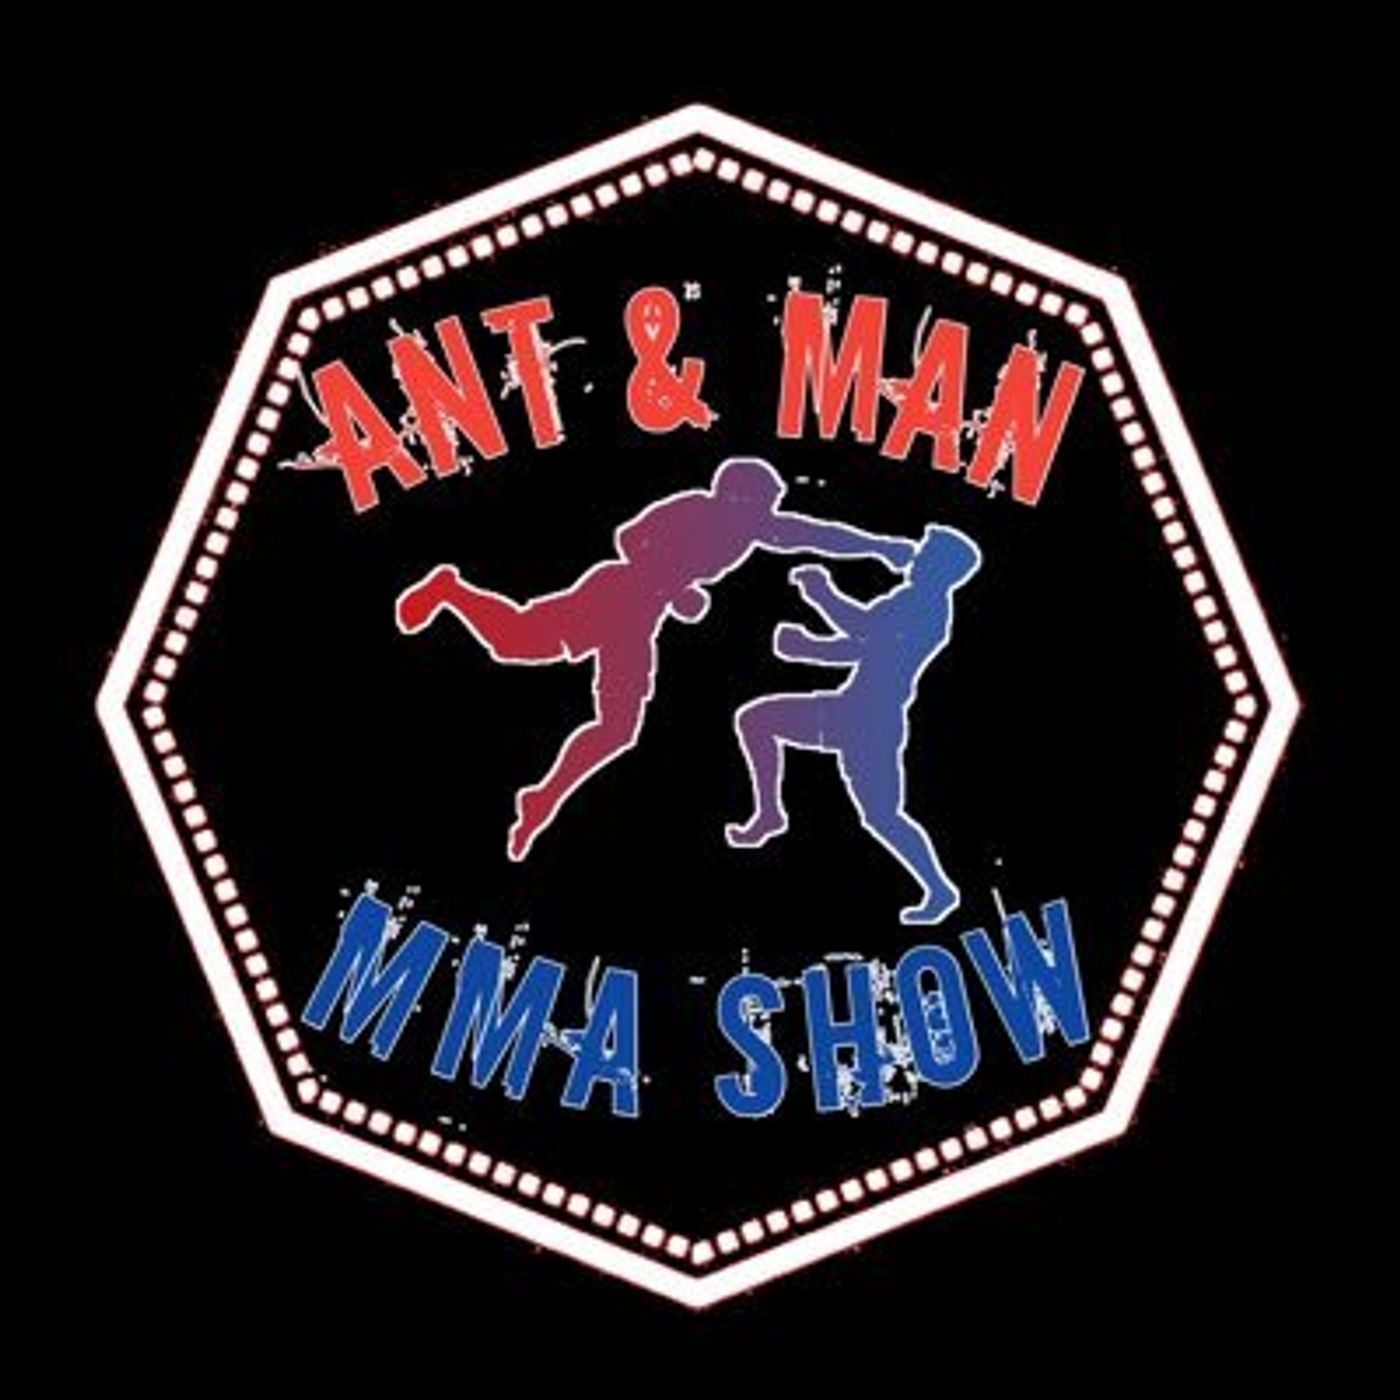 Ant & Man MMA Show